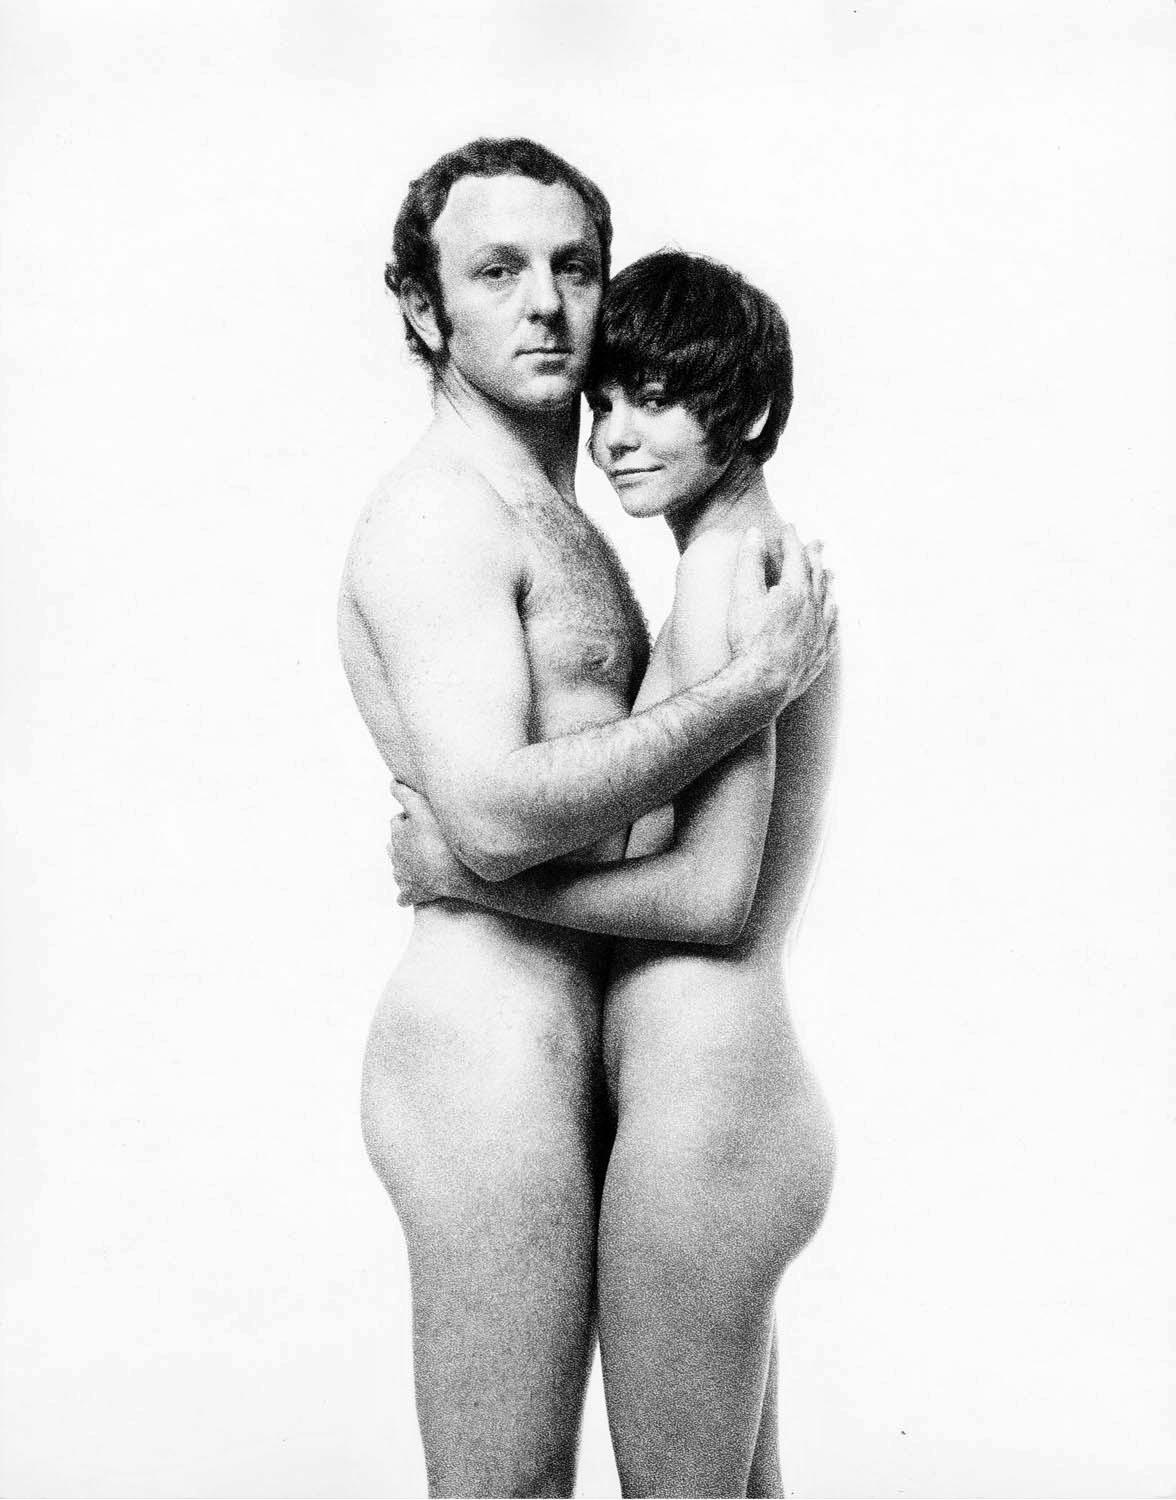 British pop artist Gerald Laing & wife Galina pose nude for wedding photos